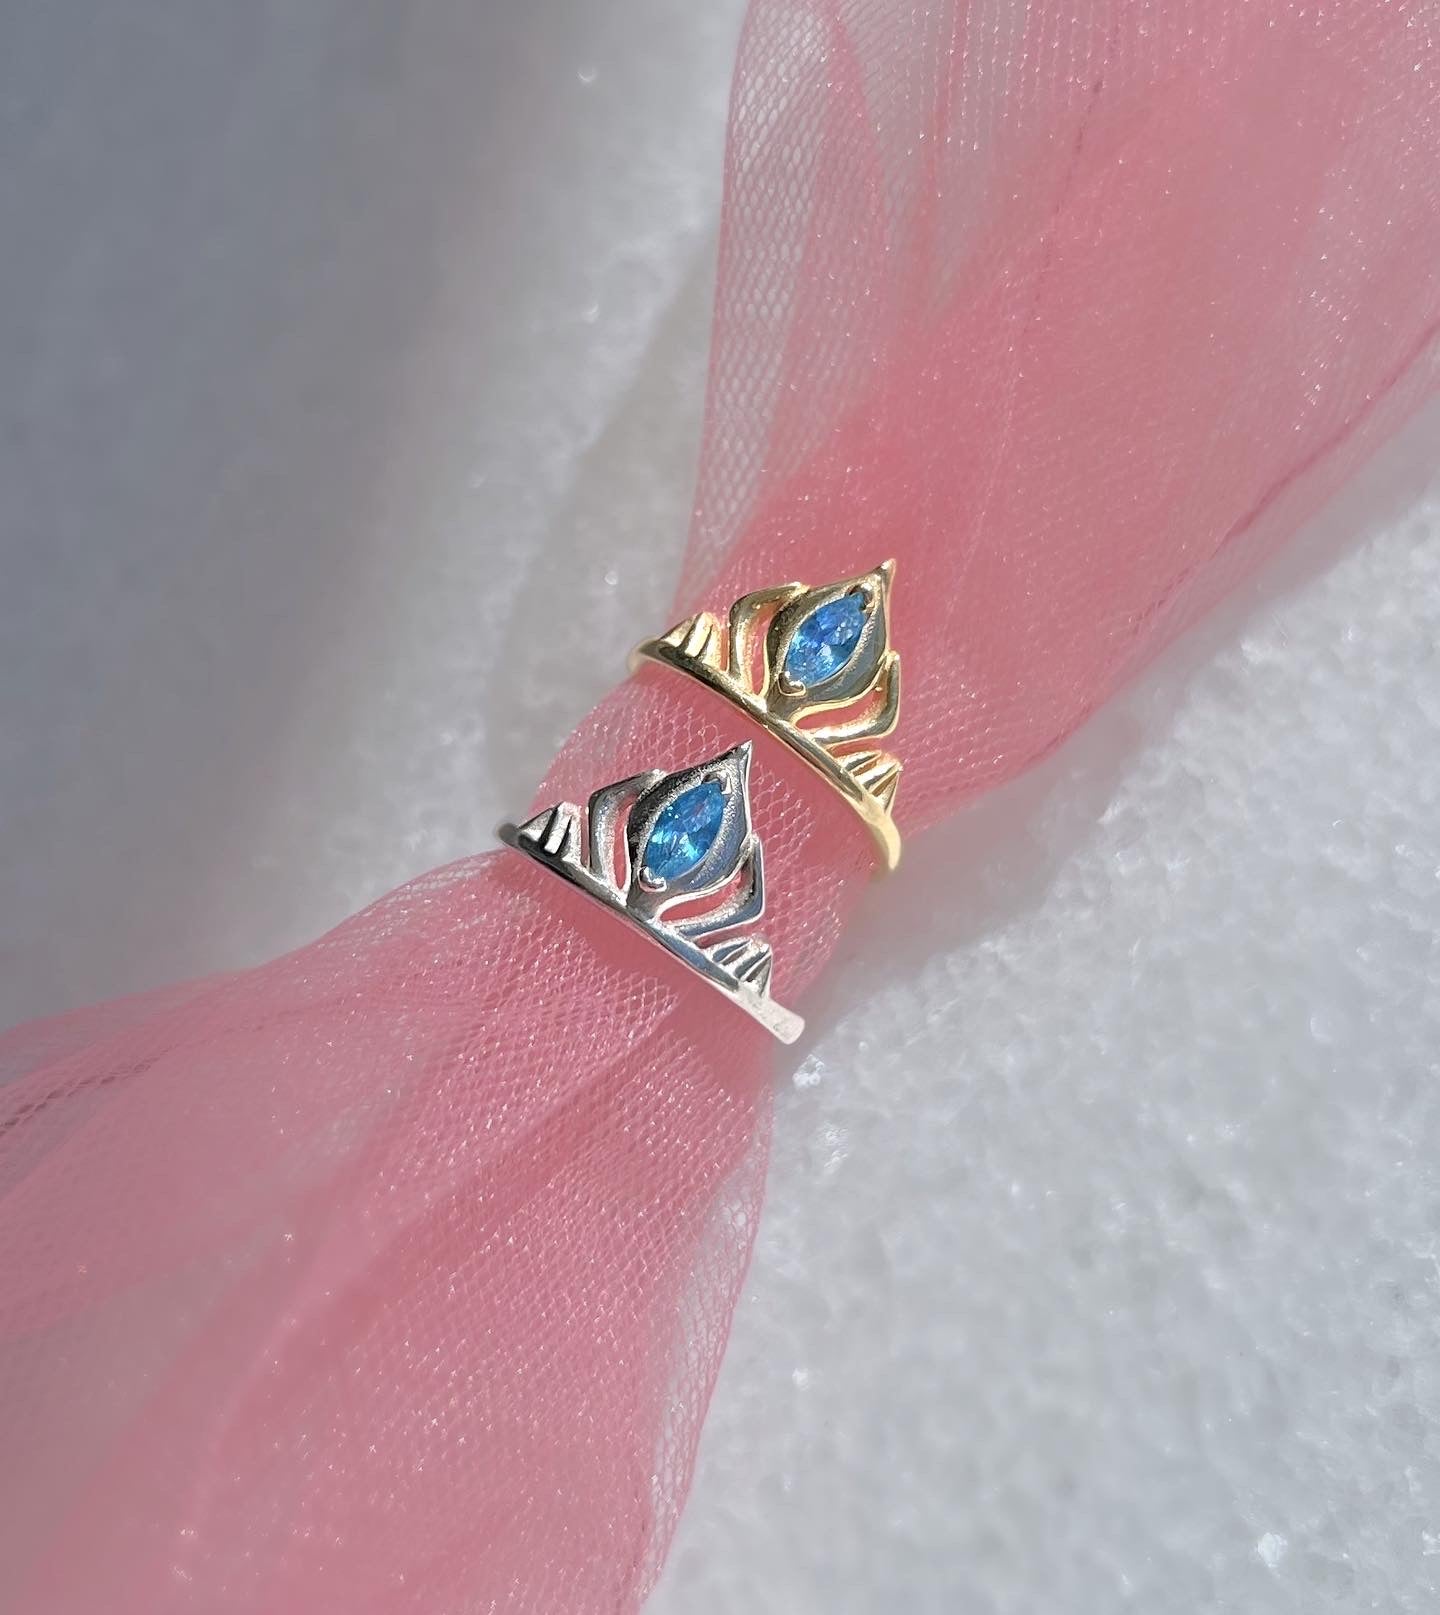 Frozen Elsa Crown Ring Inspired -925 Sterling Silver Ring